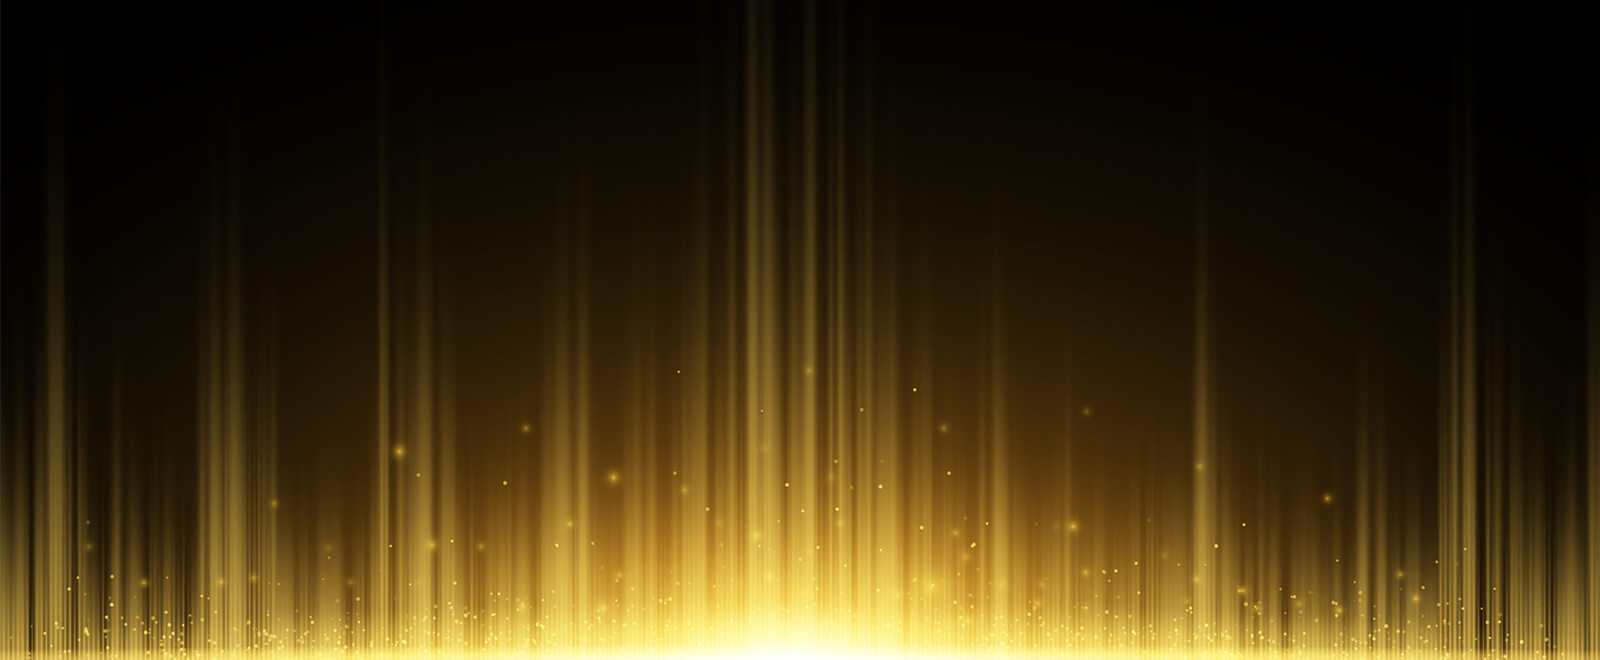 Gold glitter file image